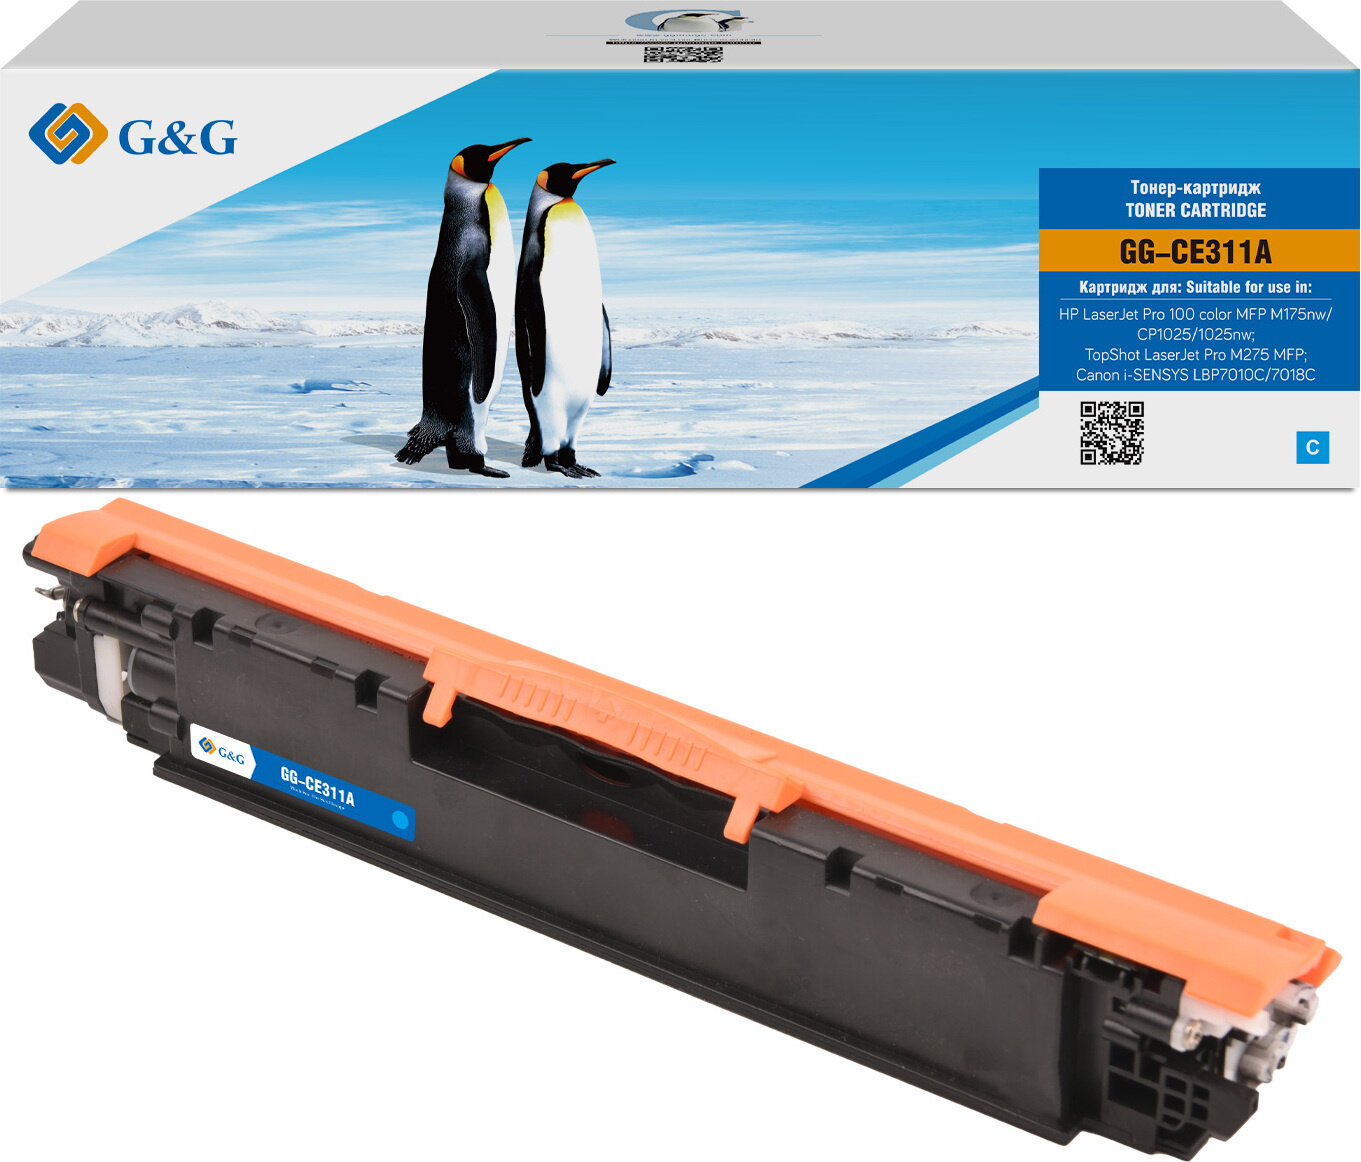 Картридж лазерный GG GG-CE311A CE311A голубой 1000стр. для HP LaserJet Pro MFP M175nwCP10251025nwM27